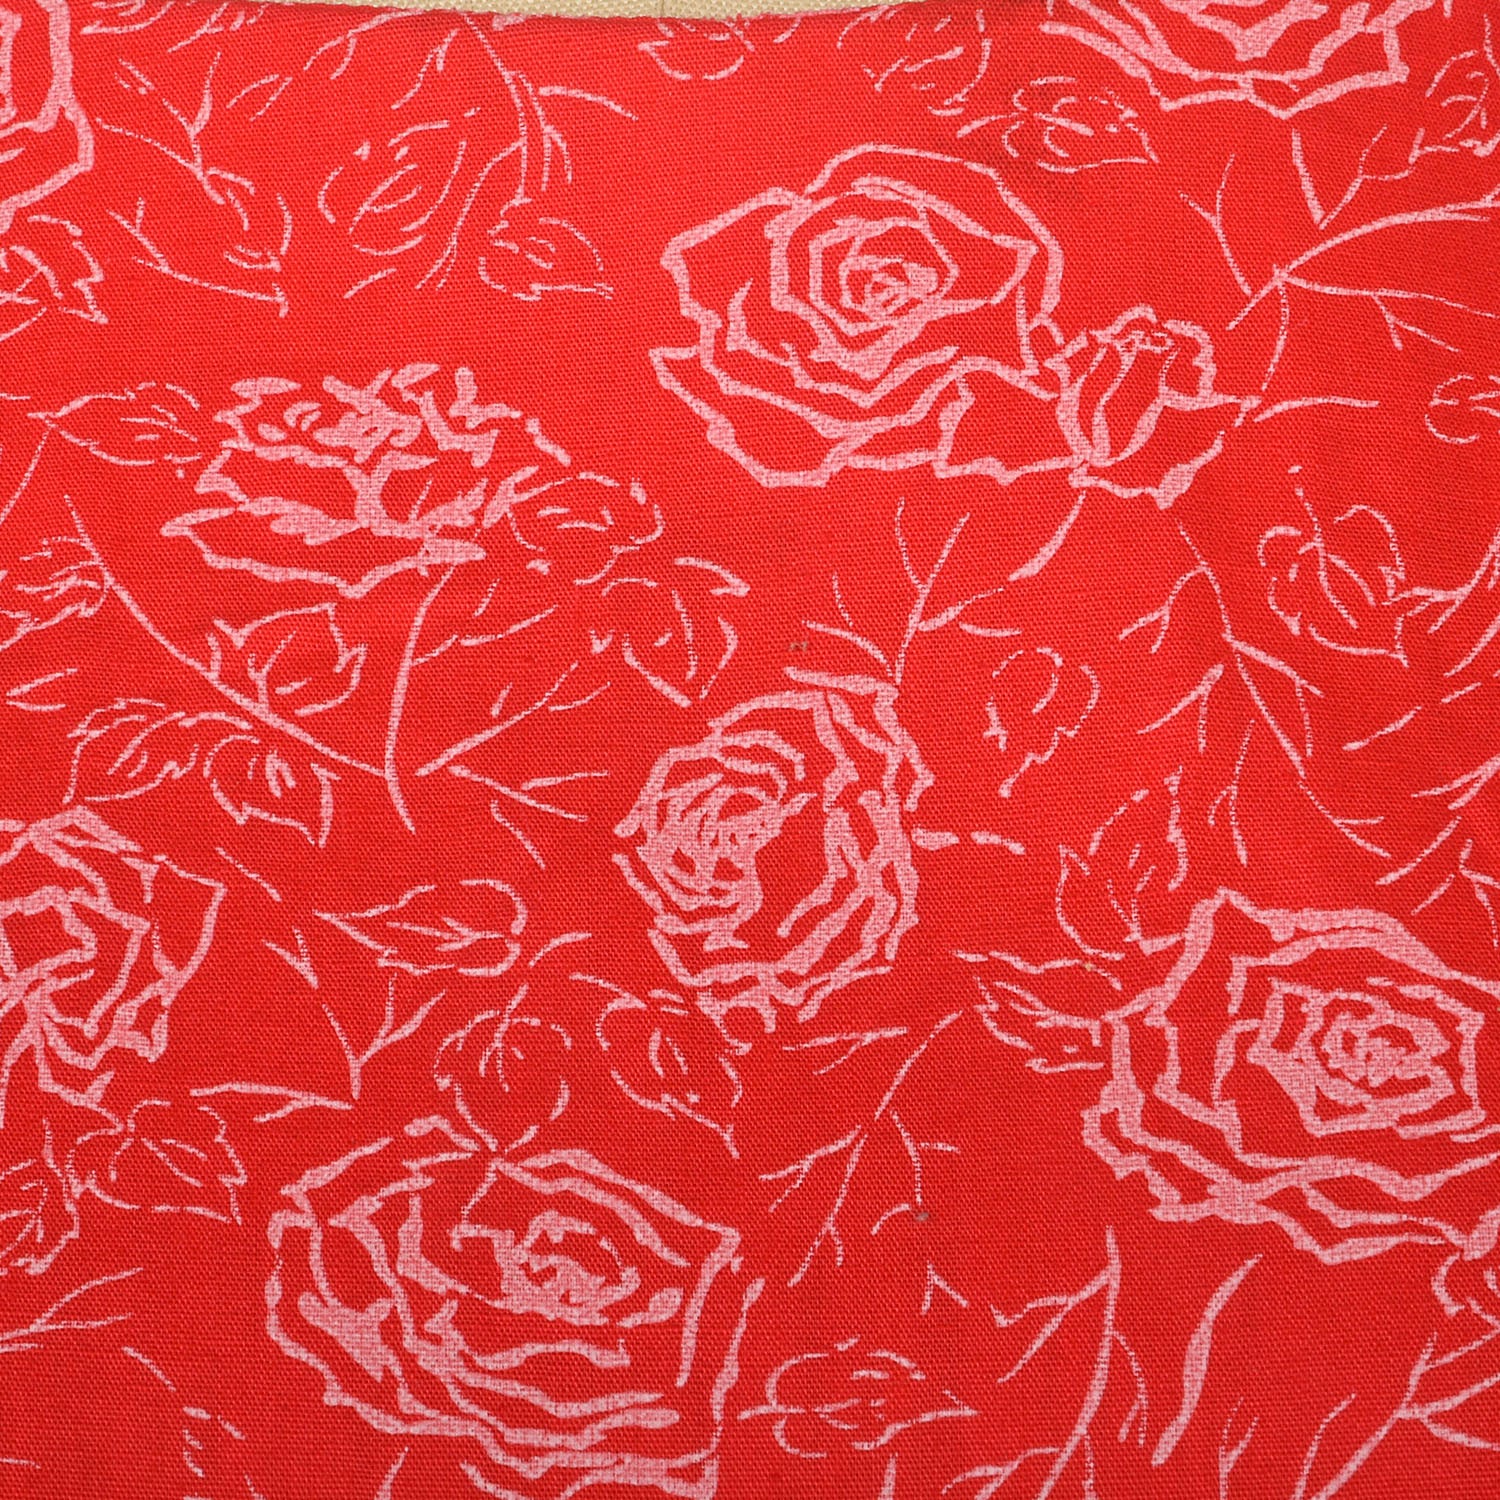 XXS 1950s Novelty Print Dress Faux Corset Laced Waist Red Rose Cotton Short Sleeve